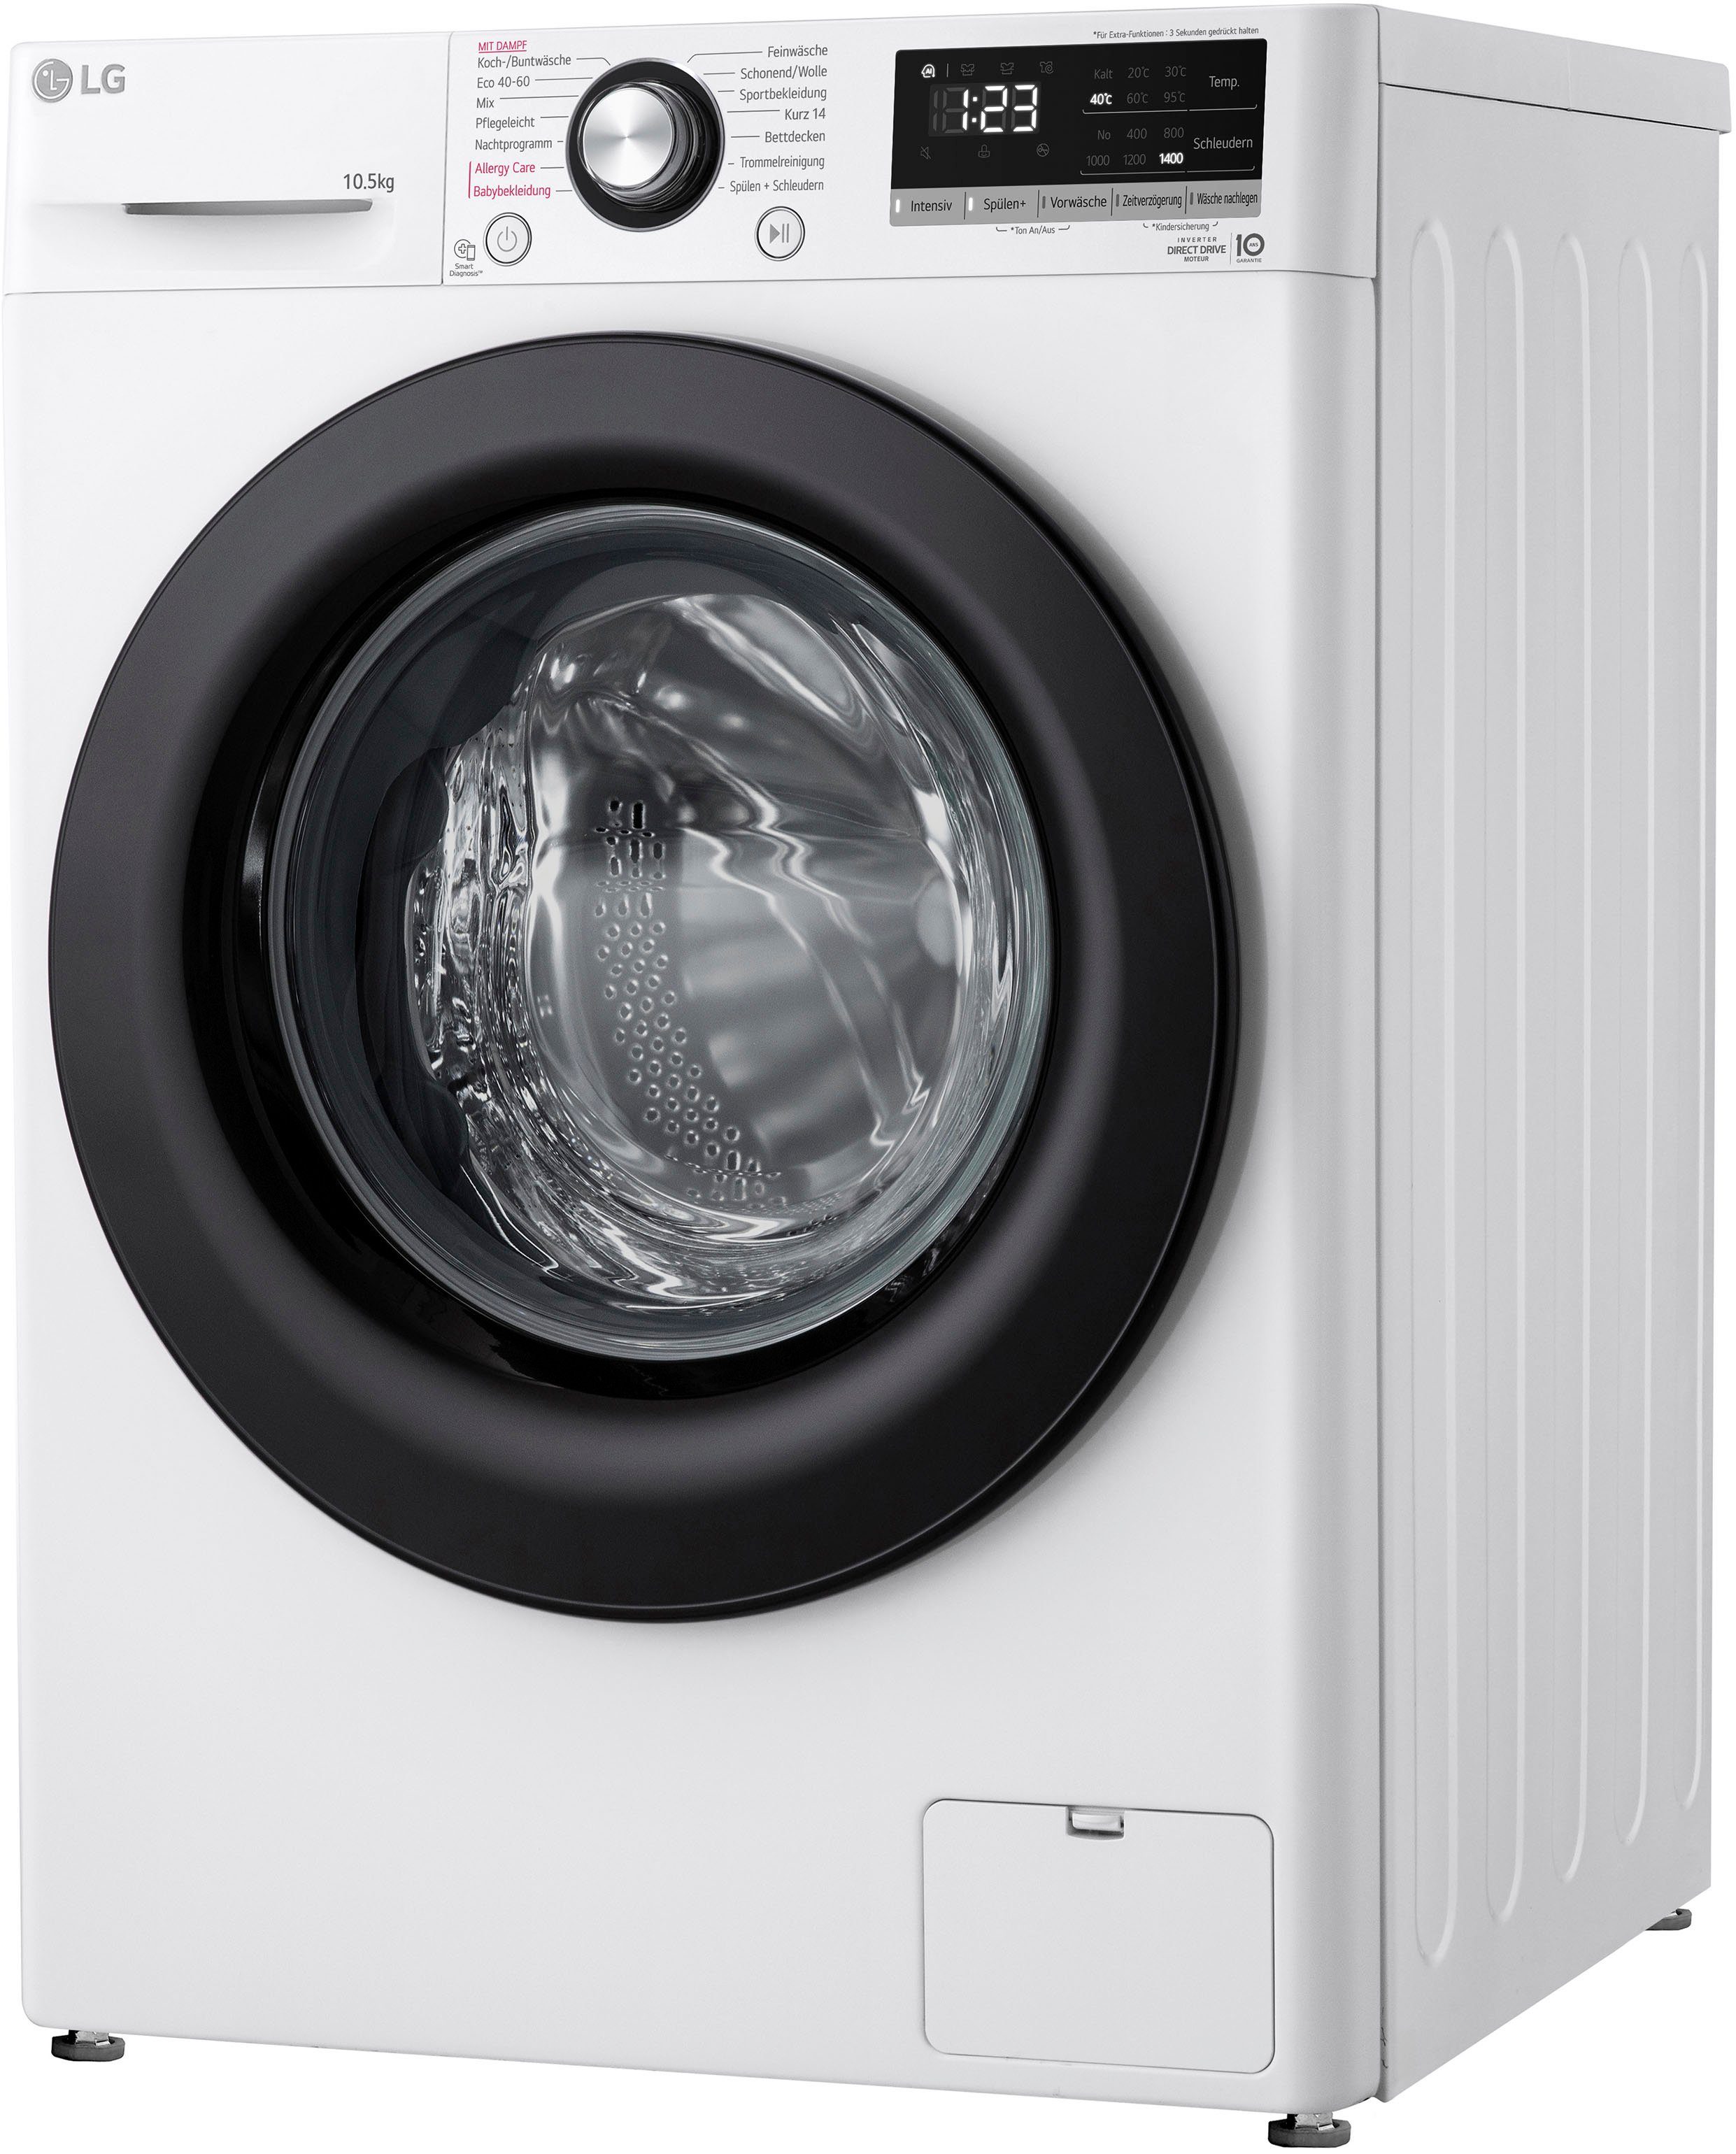 Waschmaschine LG U/min kg, 1400 10,5 F4WV40X5,